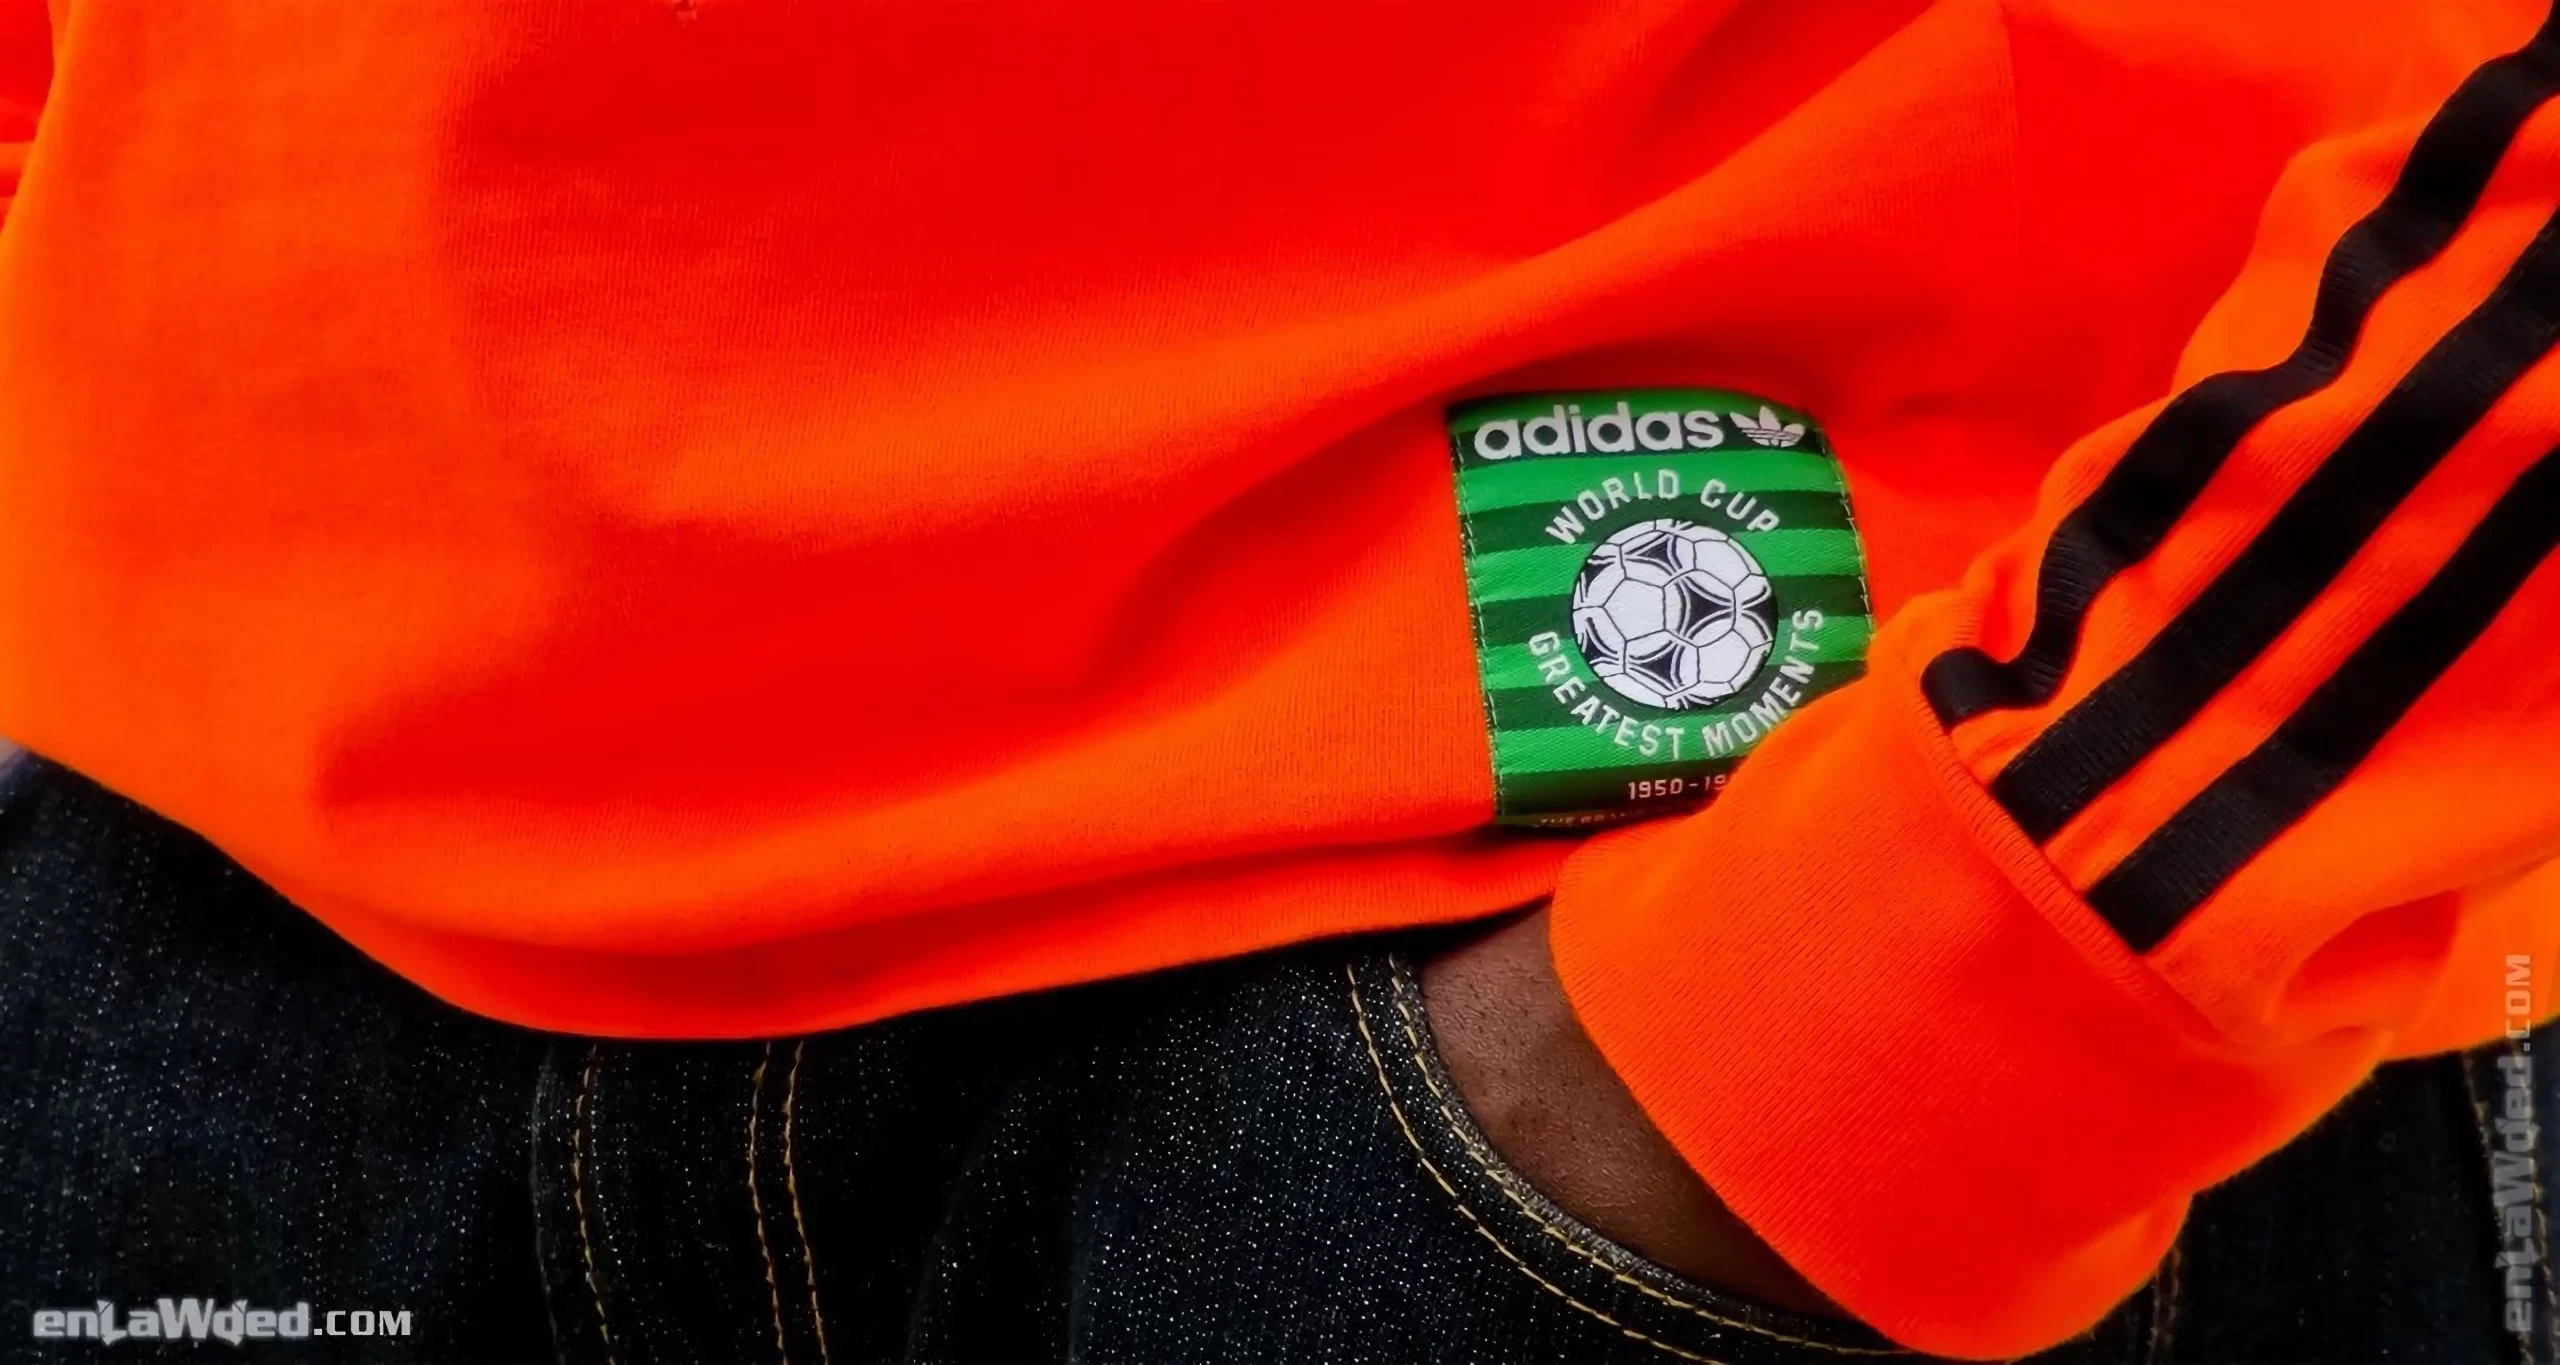 Men’s 2007 Netherlands ’74 Total Football LS by Adidas: Courageous (EnLawded.com file #lmc4w98wcsjqve5sluu)